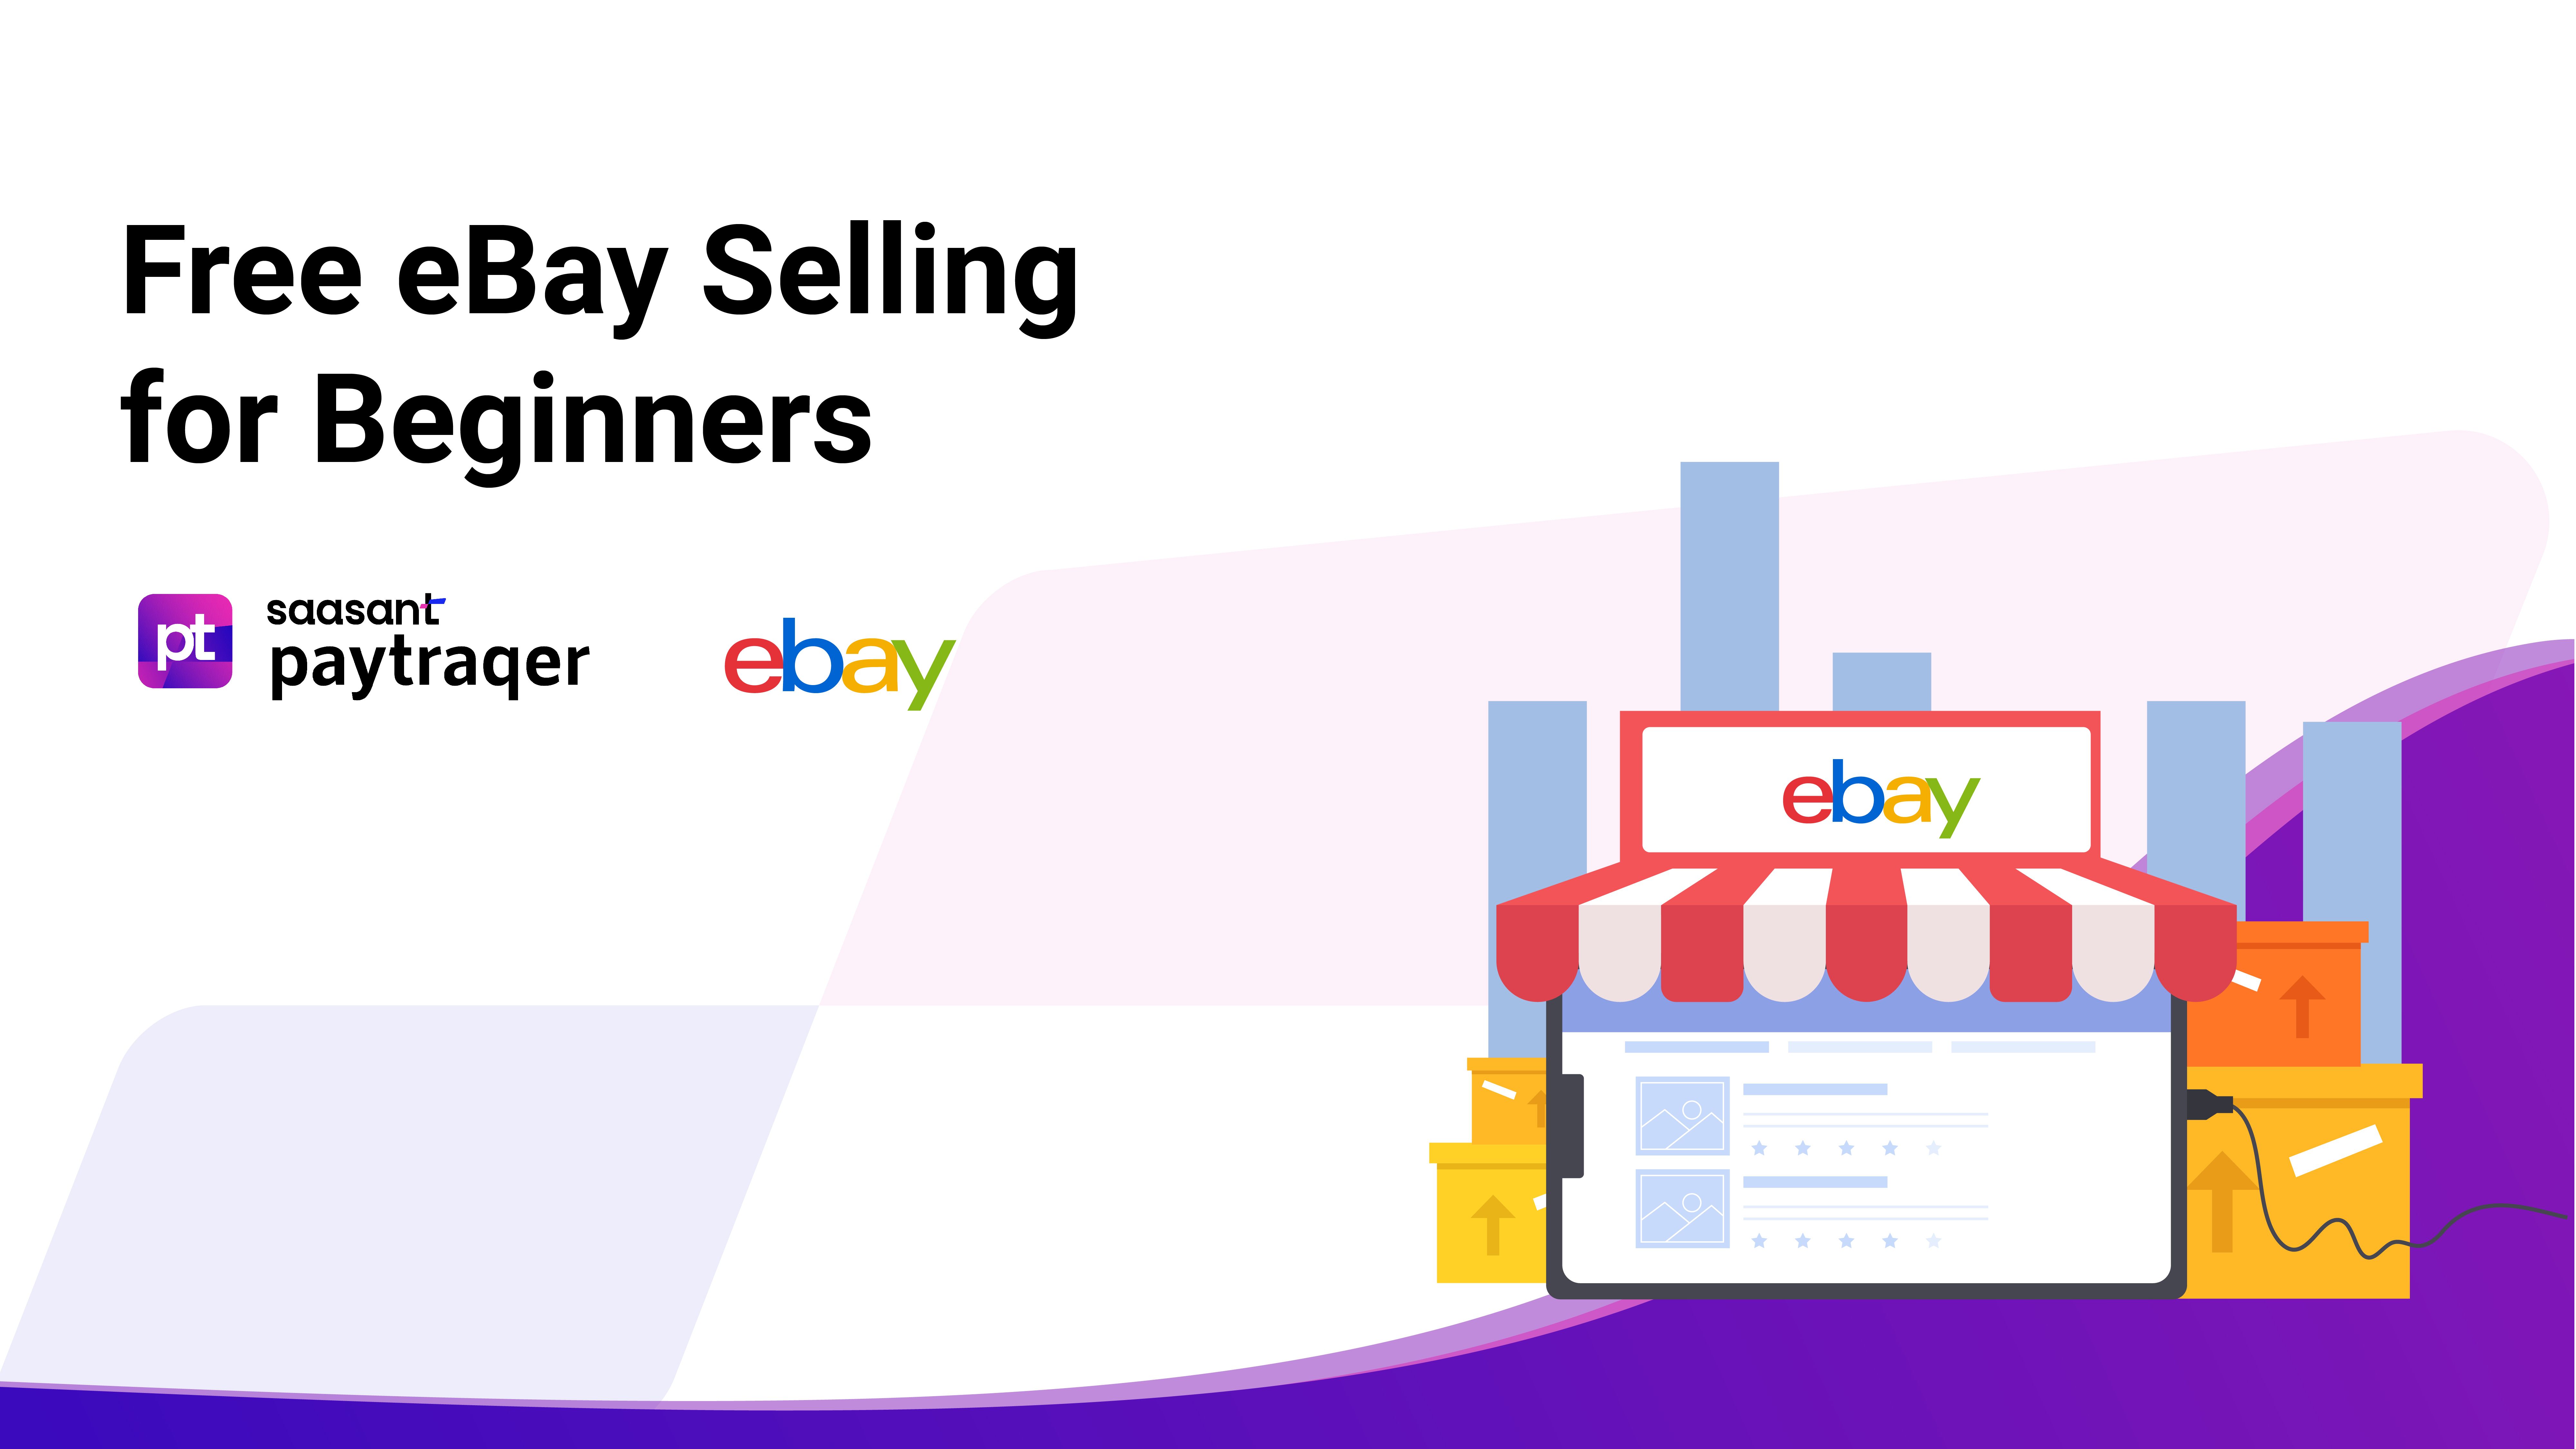 Free eBay Selling for Beginners